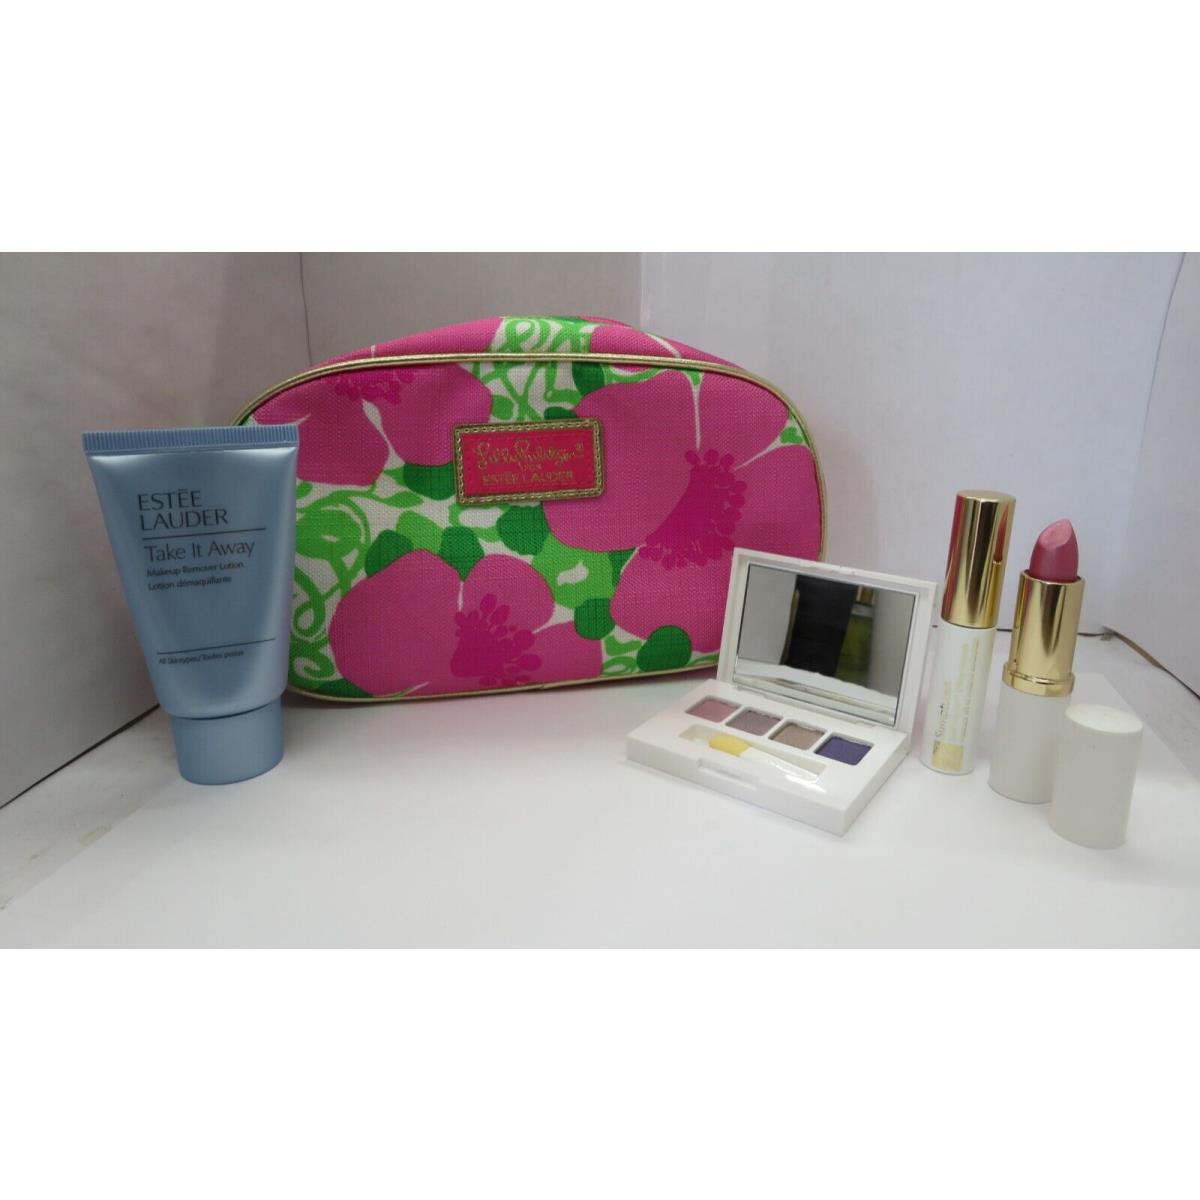 Lilly Pulitzer Estee Lauder 5 Pcs Sample Trv. Skincare/makeup Gift Set